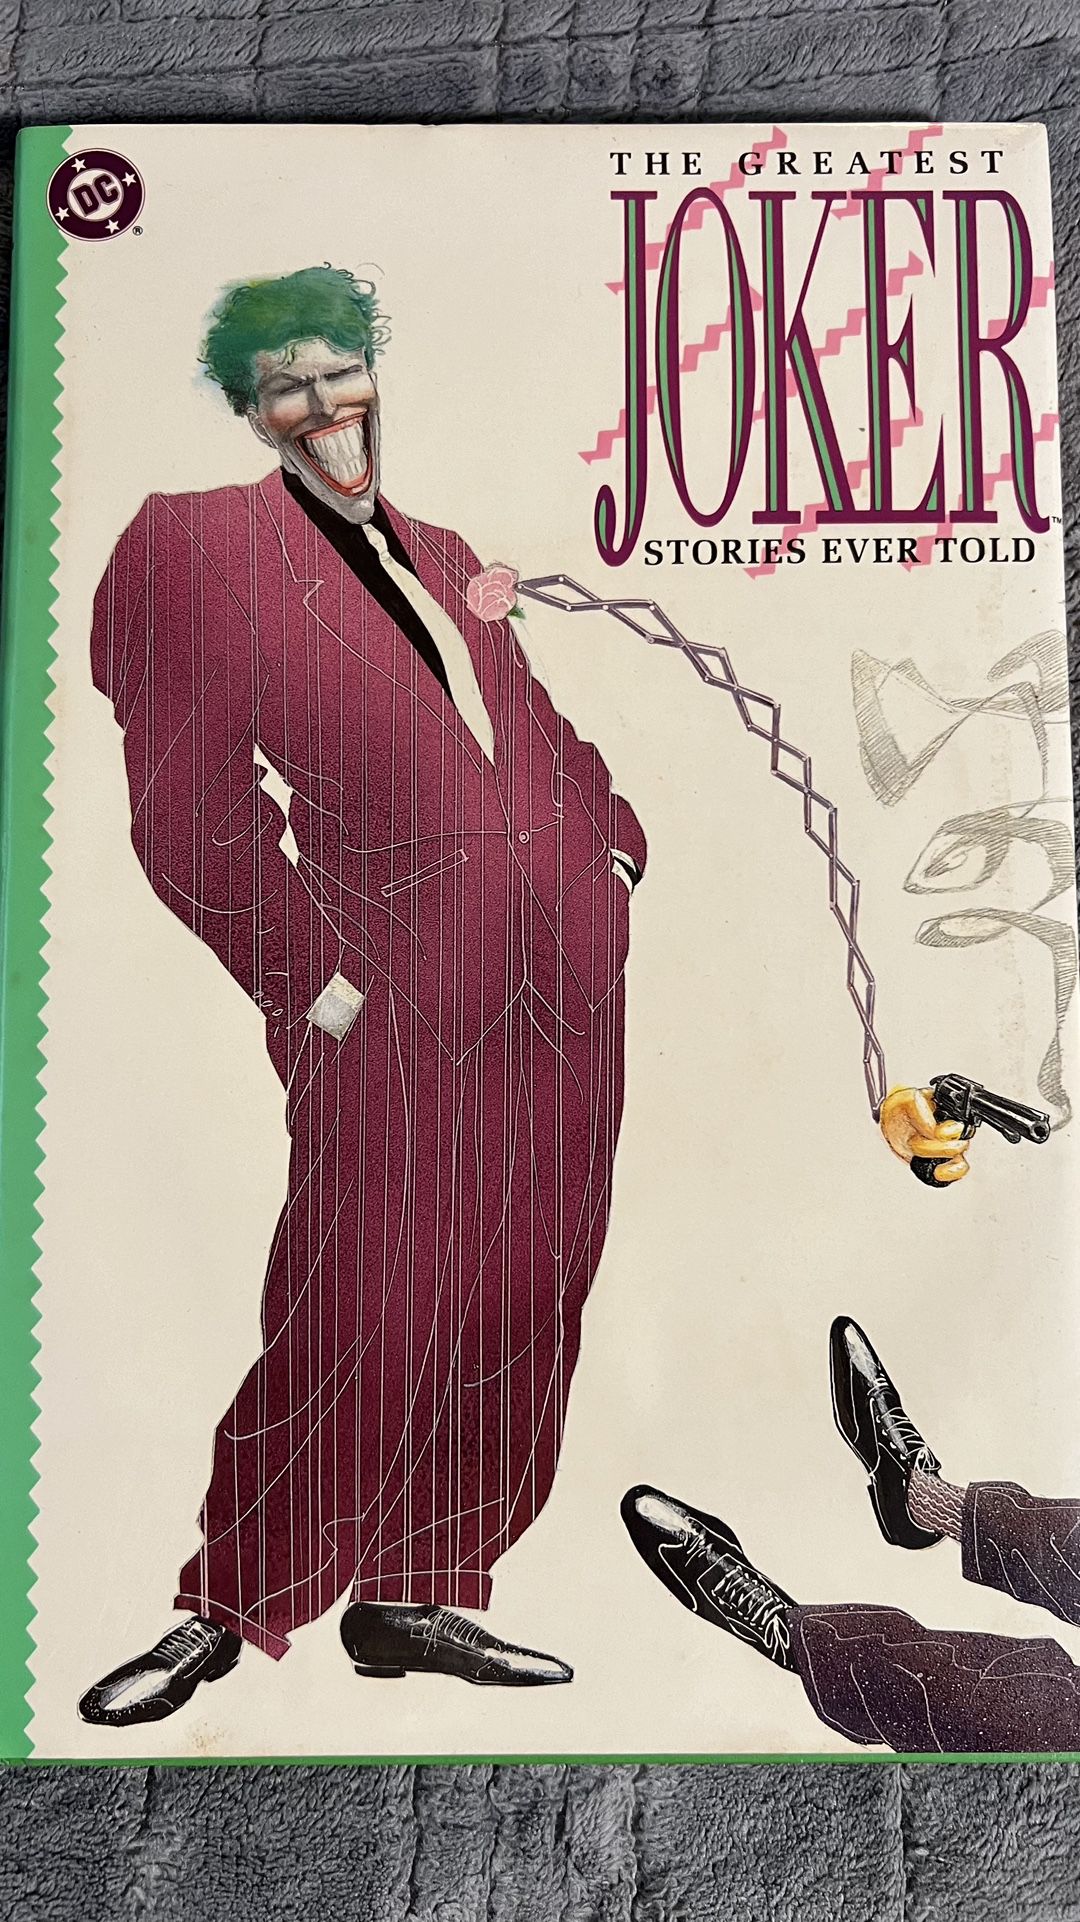 JOKER (Hardcover Edition)